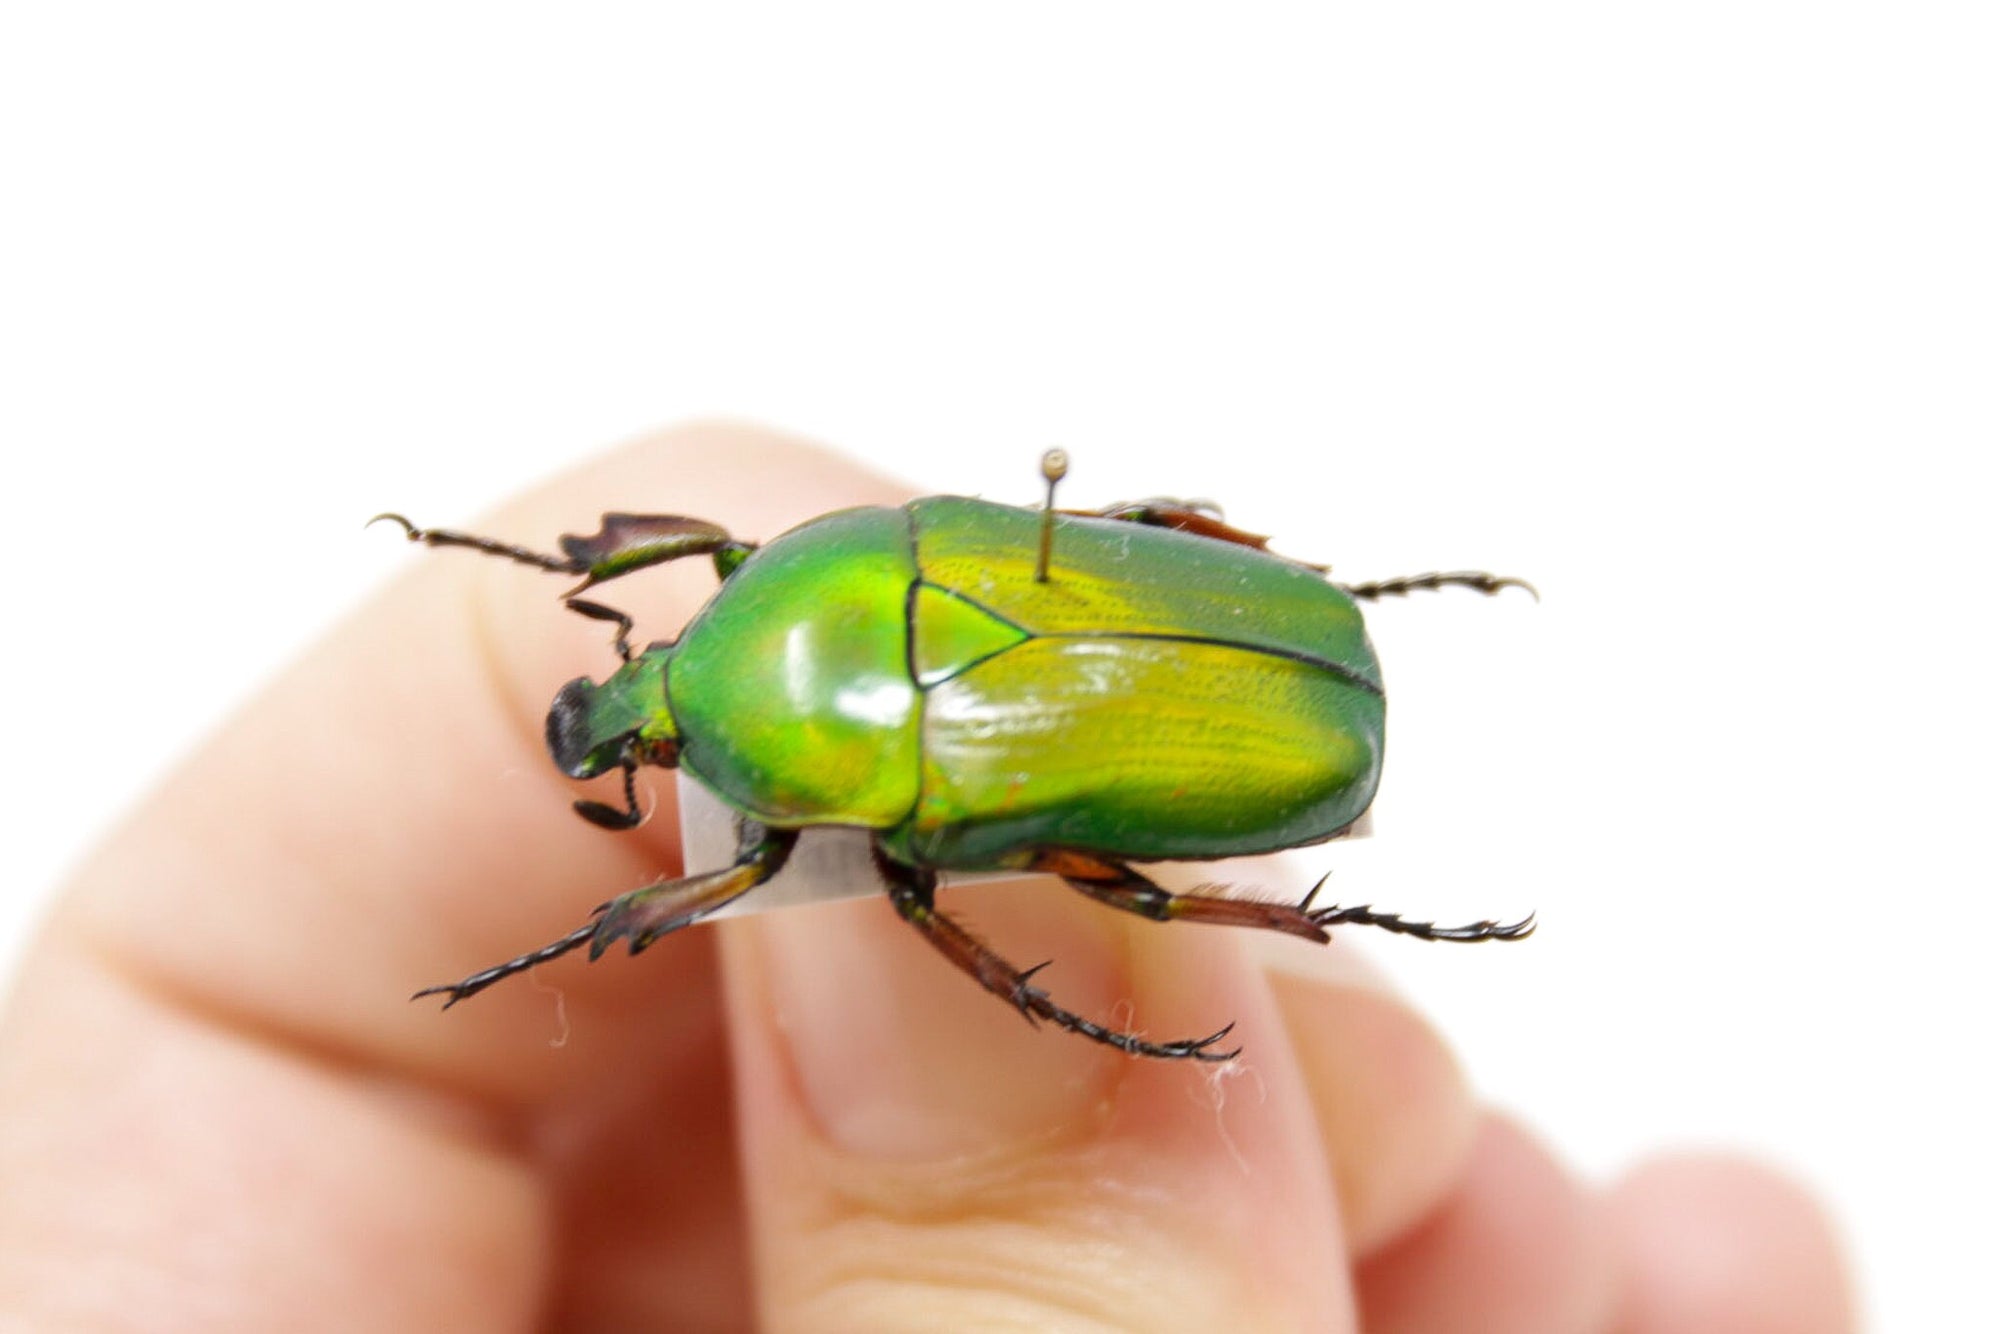 Ingrisma euryrrhina 26.5mm, A1 Real Beetle Pinned Set Specimen, Entomology Taxidermy #OC41